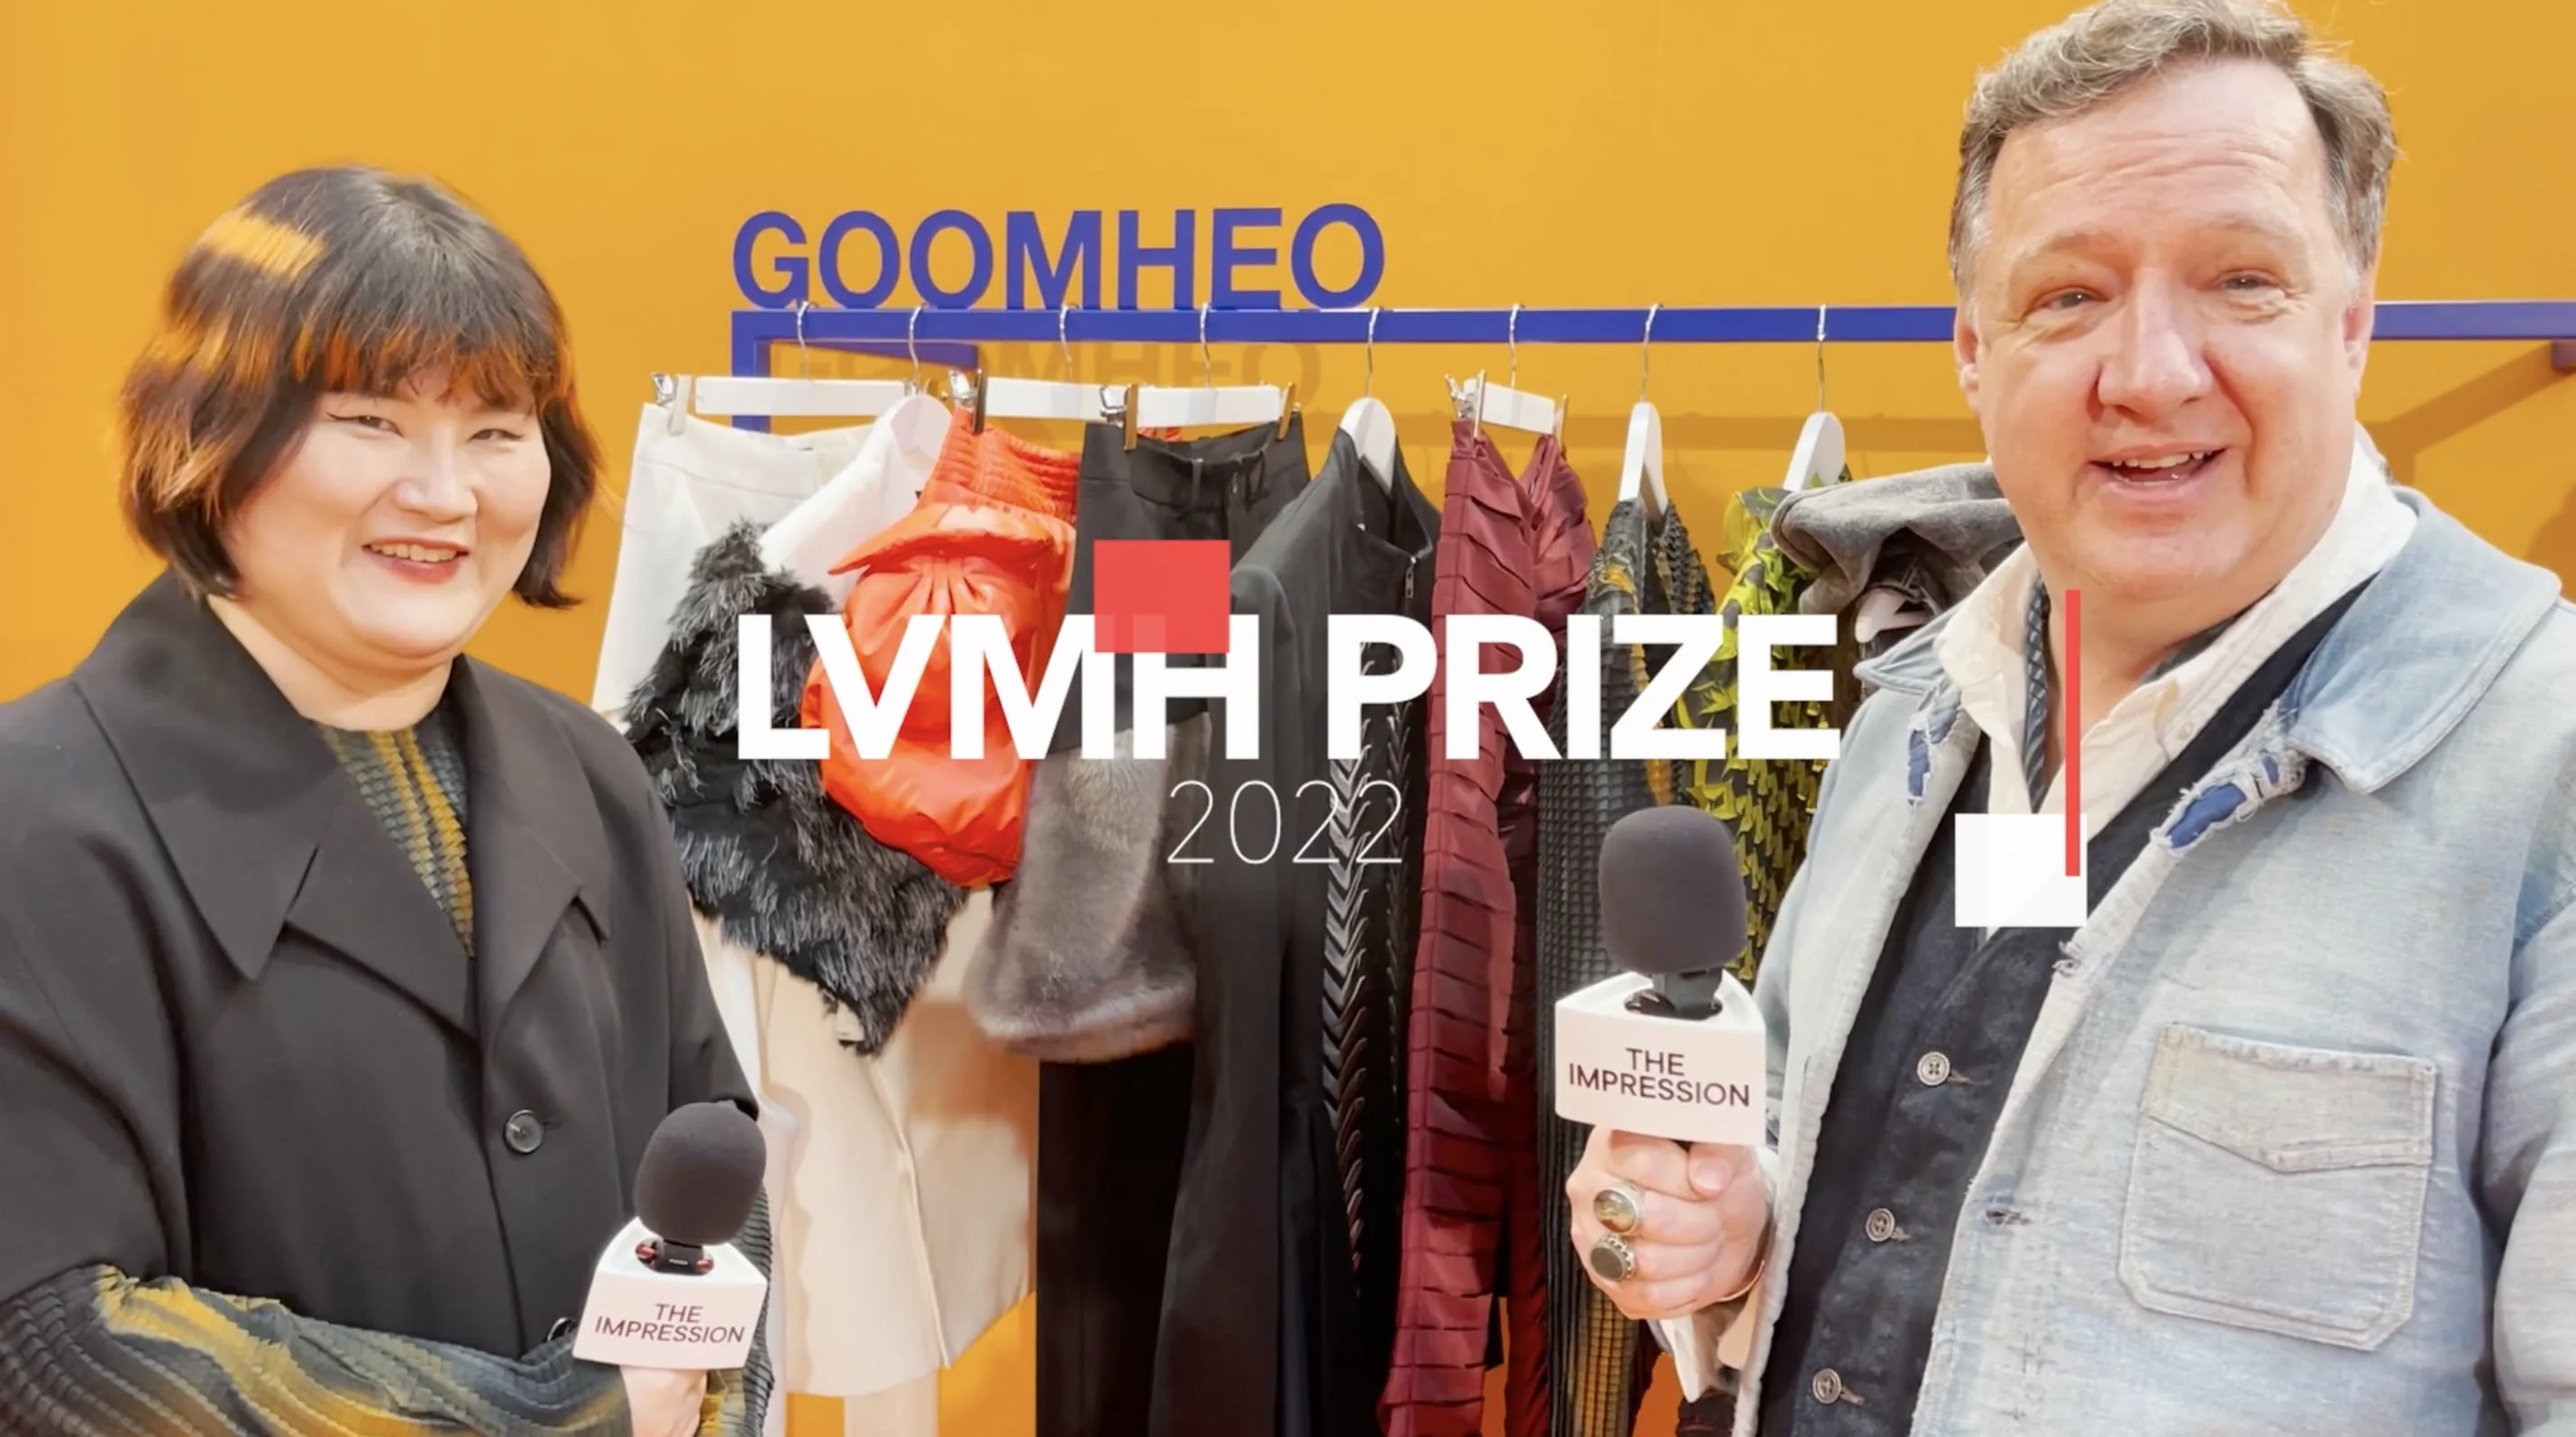 Goom Heo of Goomheo - LVMH Prize 2022 Semi Finalist Interview on Vimeo